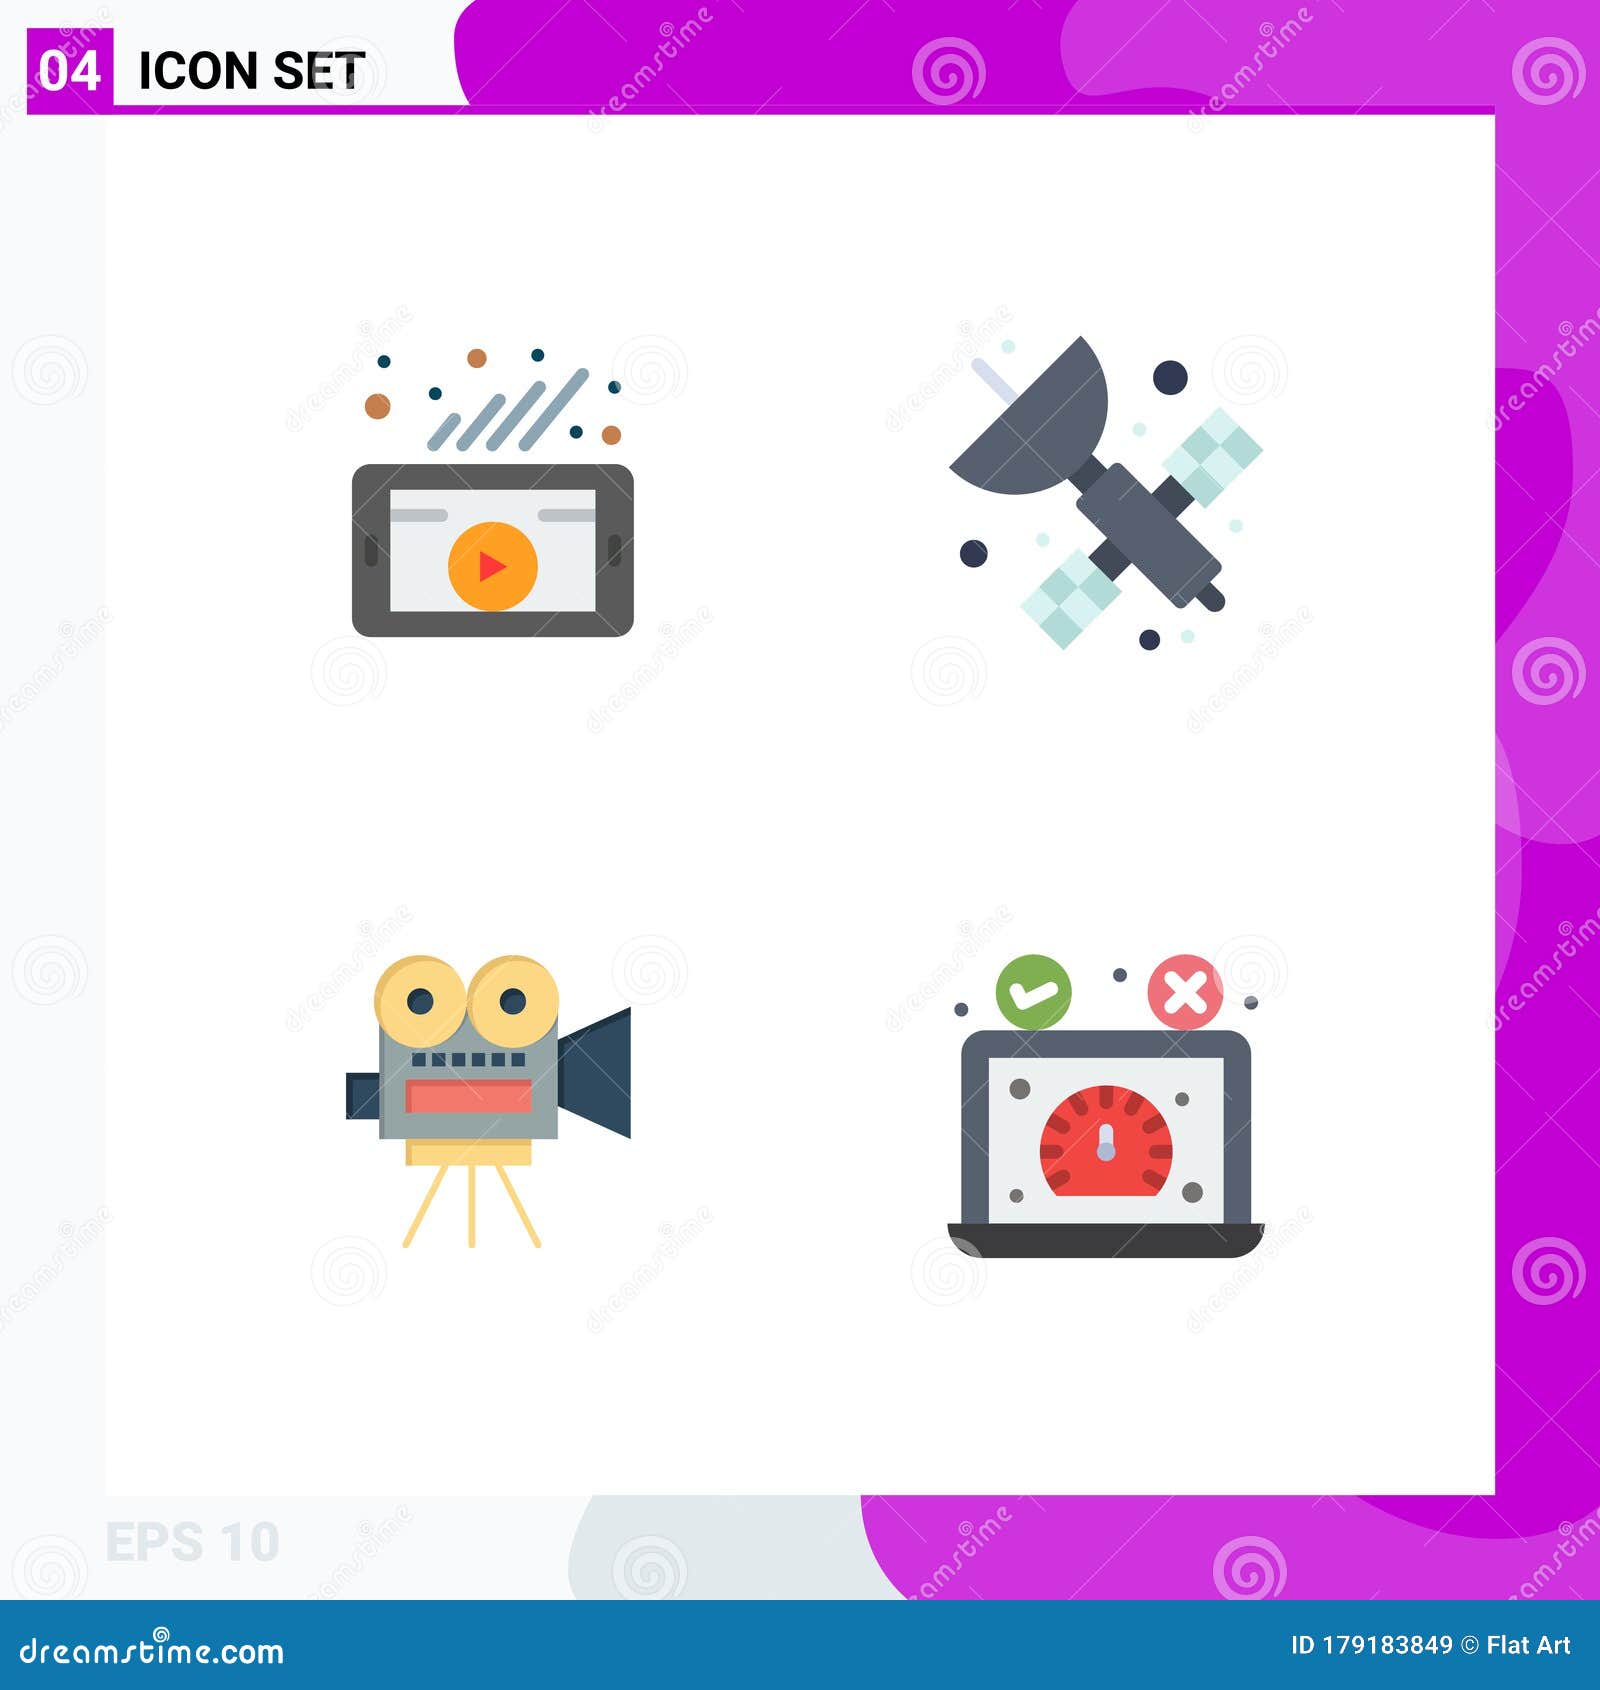 mobile interface flat icon set of 4 pictograms of marketing, movi, social network, satellite, education